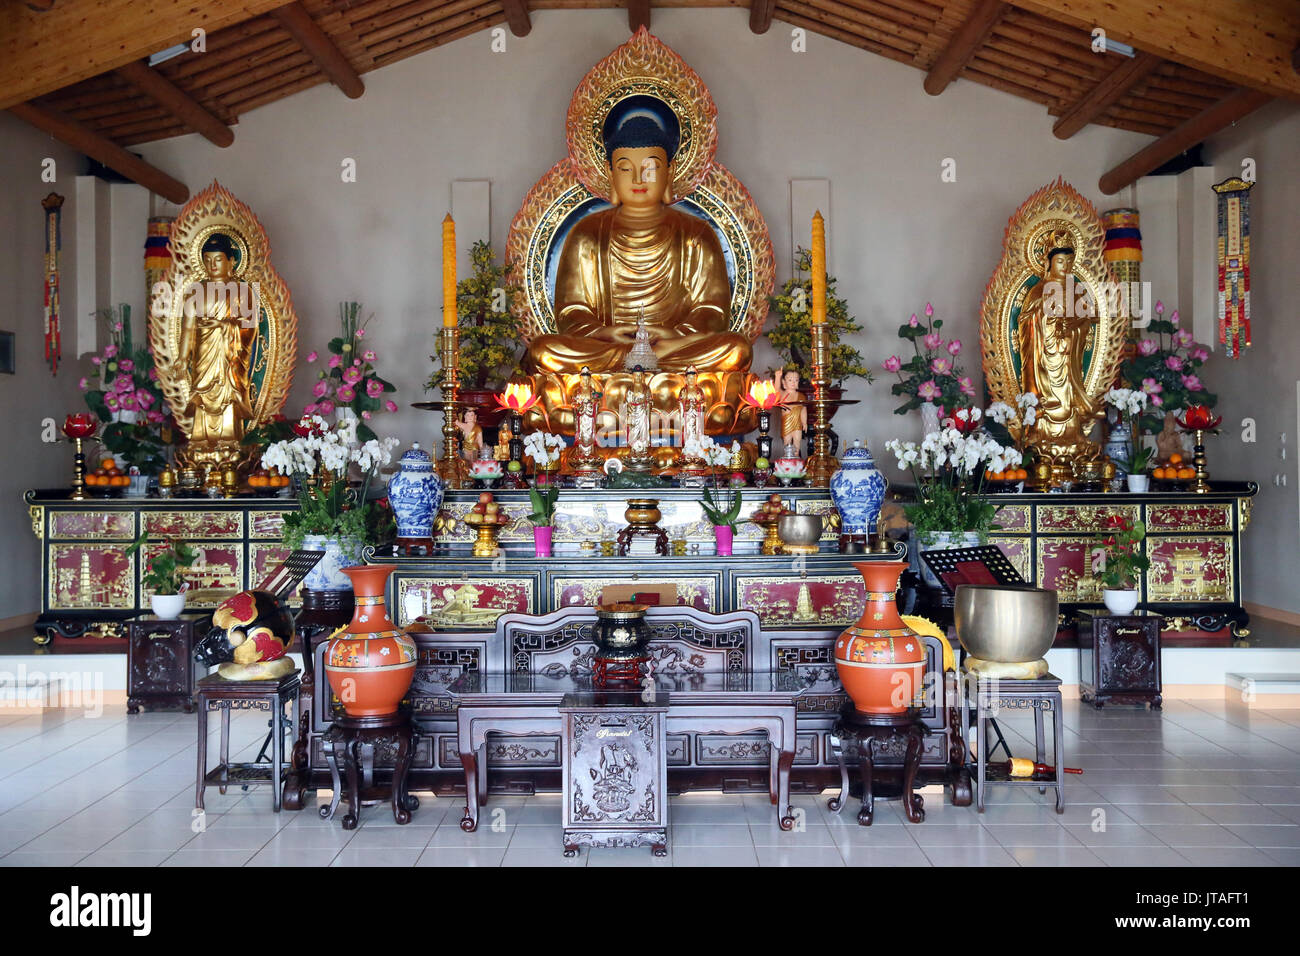 Main altar in Buddhist temple, Thien Minh Pagoda, Sainte-Foy-les-Lyon, Rhone area, France, Europe Stock Photo